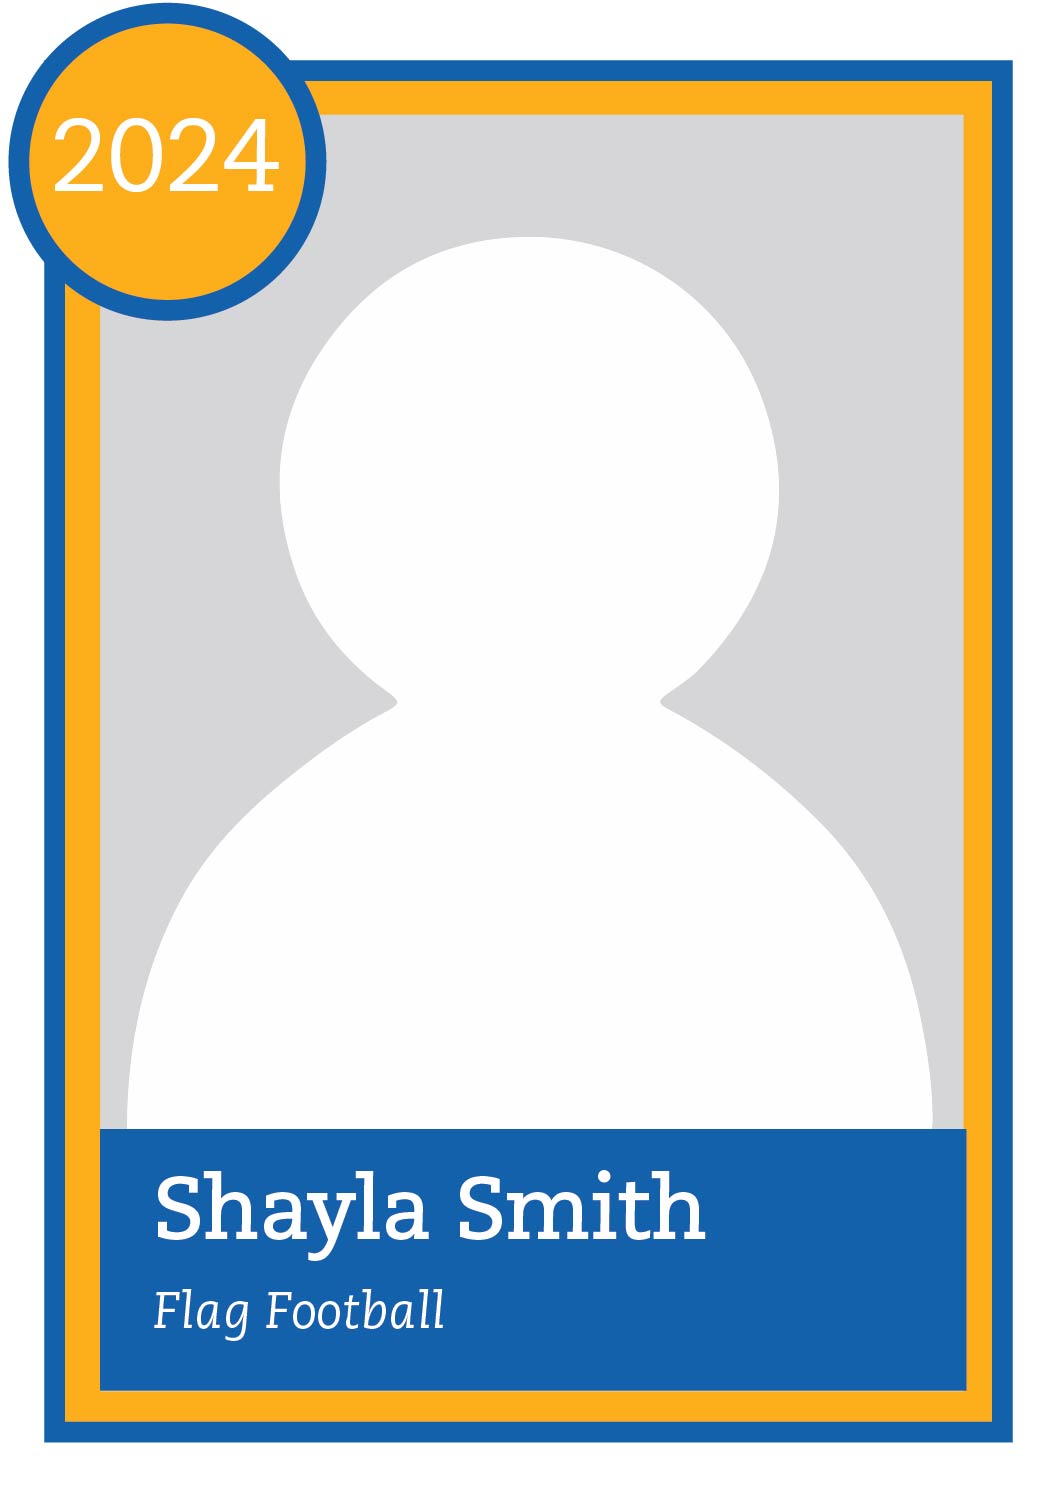 Baseball card design with headshot filler image and text "Shayla Smith, flag football"